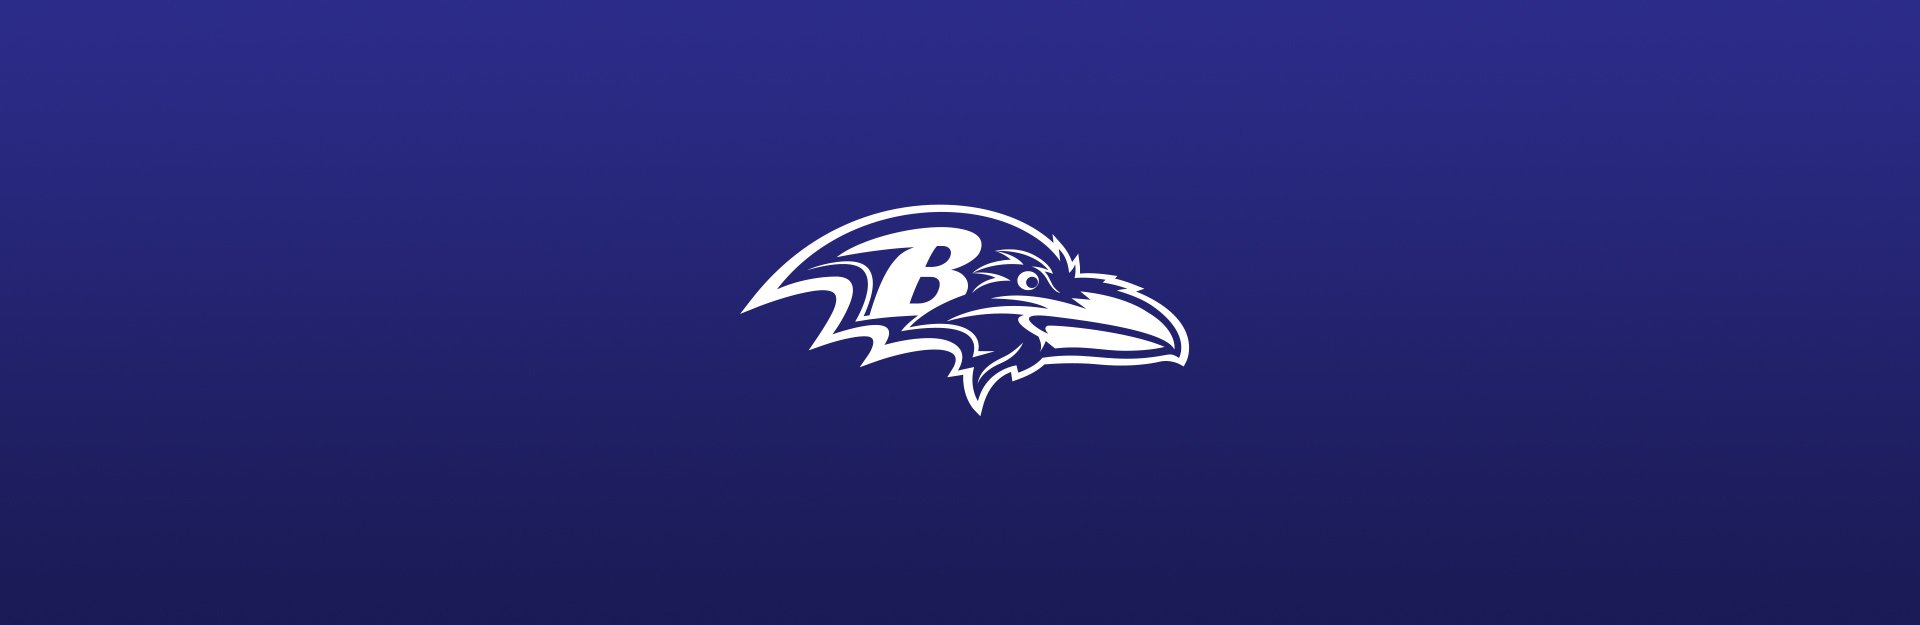 Baltimore Ravens logo on blue background